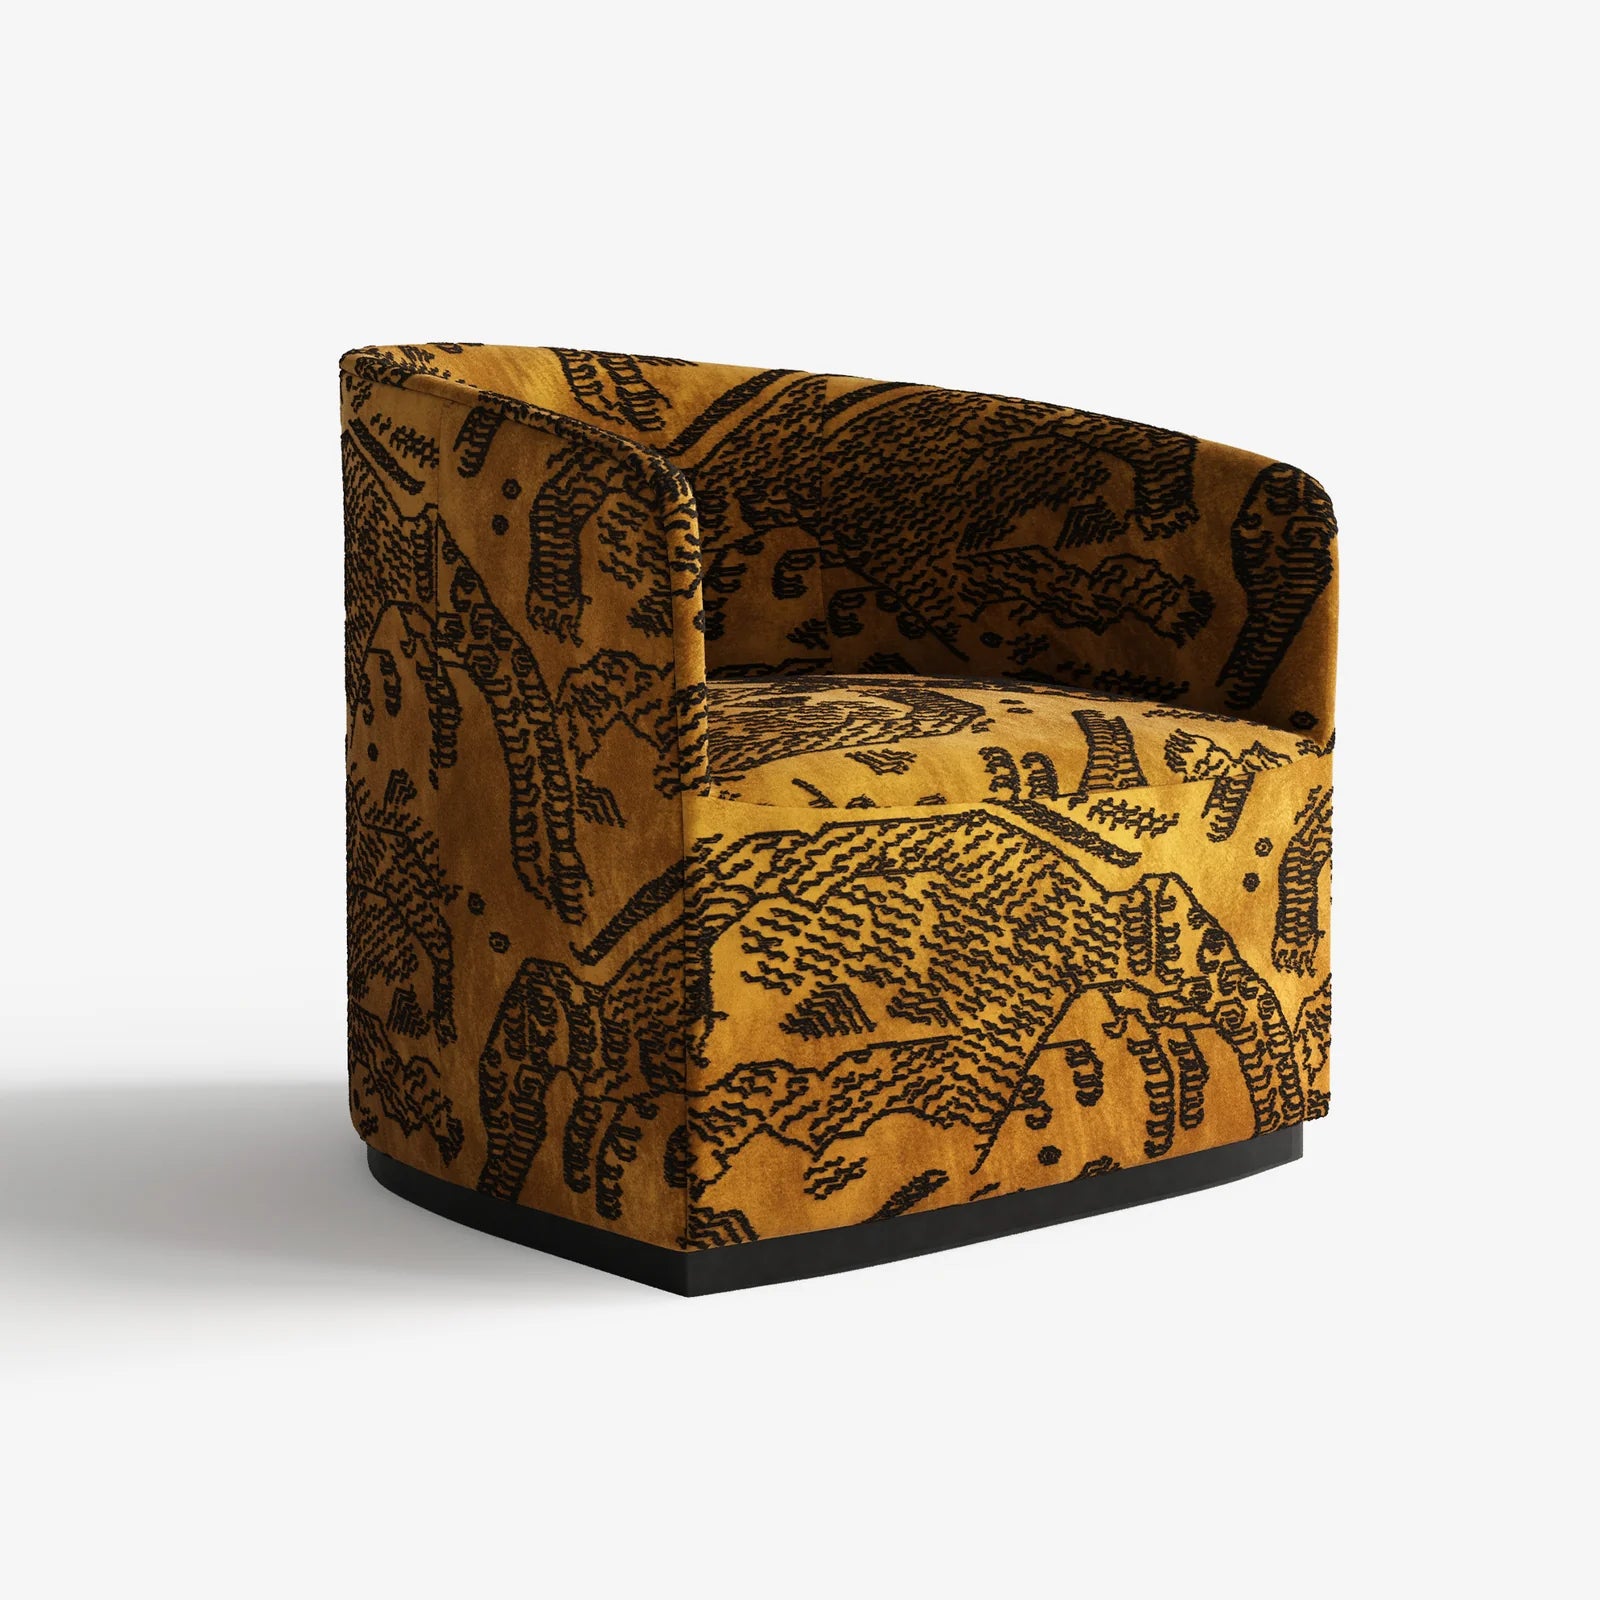 Luxury furniture, Jacquard Velvet Armchair, Contemporary Design, Modern Design